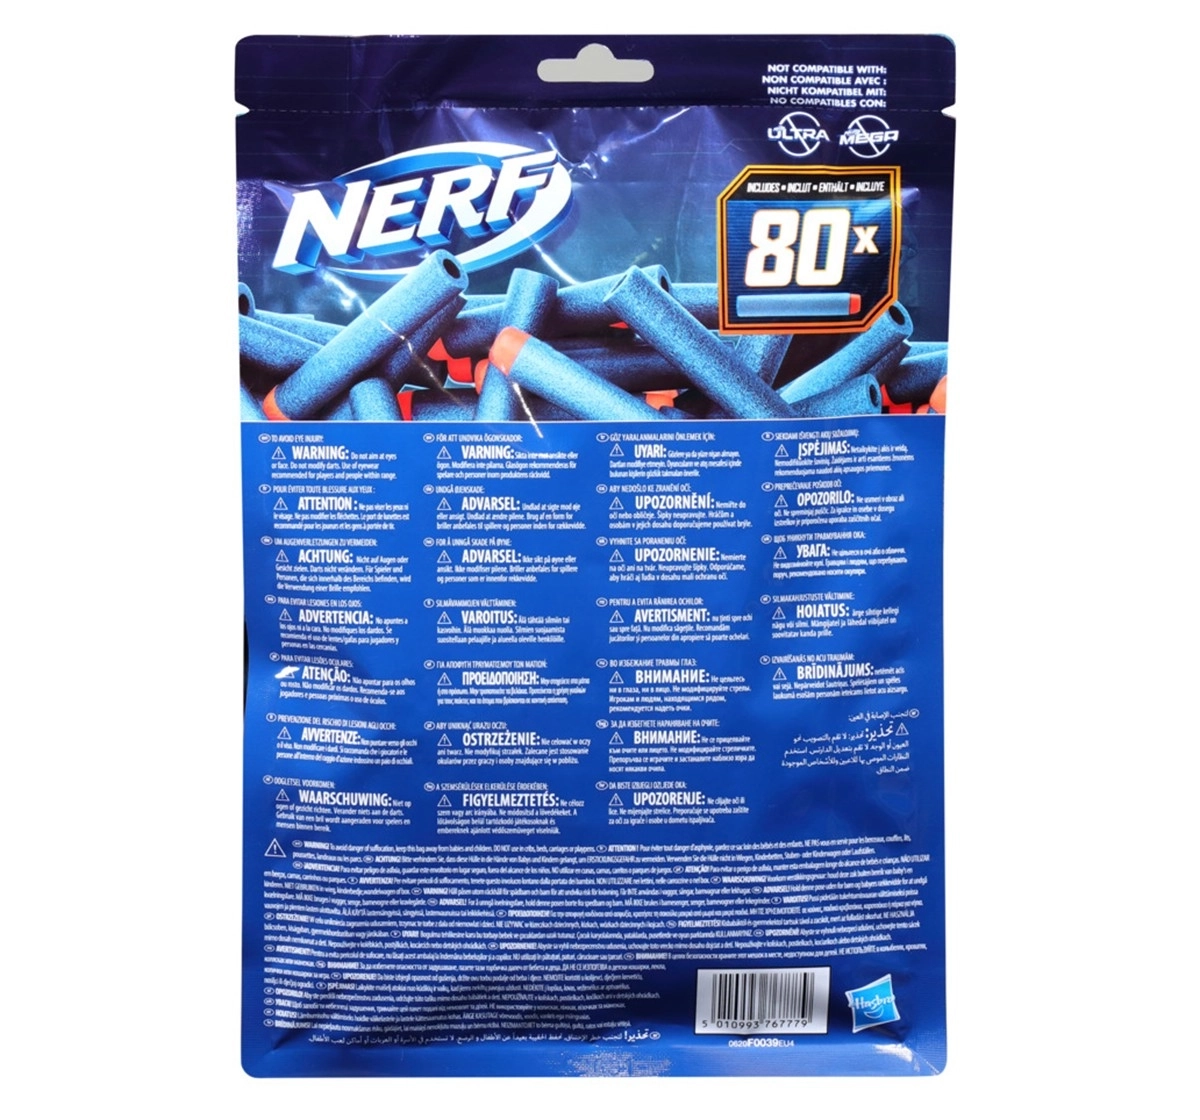 Nerf Elite 2.0 Dart Refill, 80 Nerf Elite Darts, Outdoor Games for Kids, Multicolor, 8Y+